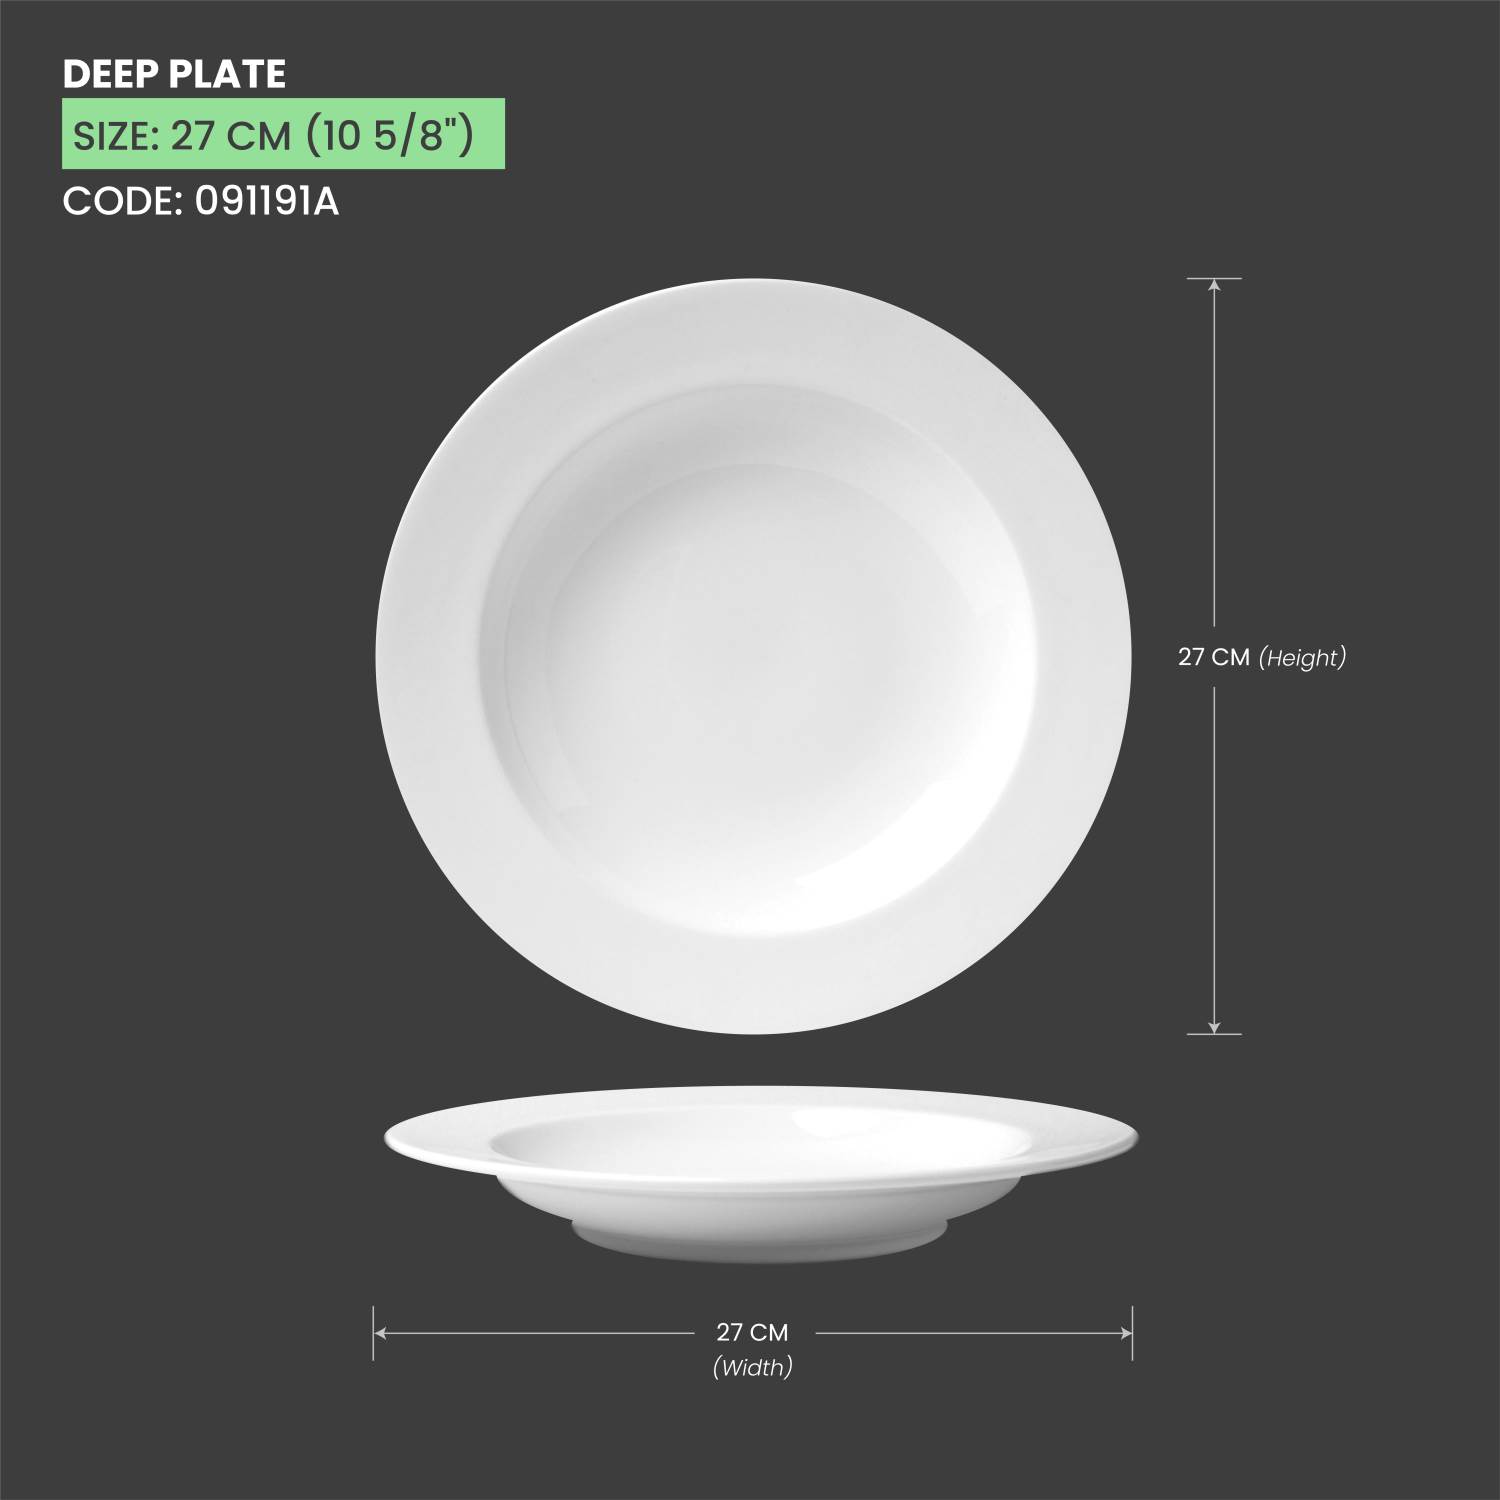 Baralee Simple Plus Deep Plate 27 Cm (10 5/8")